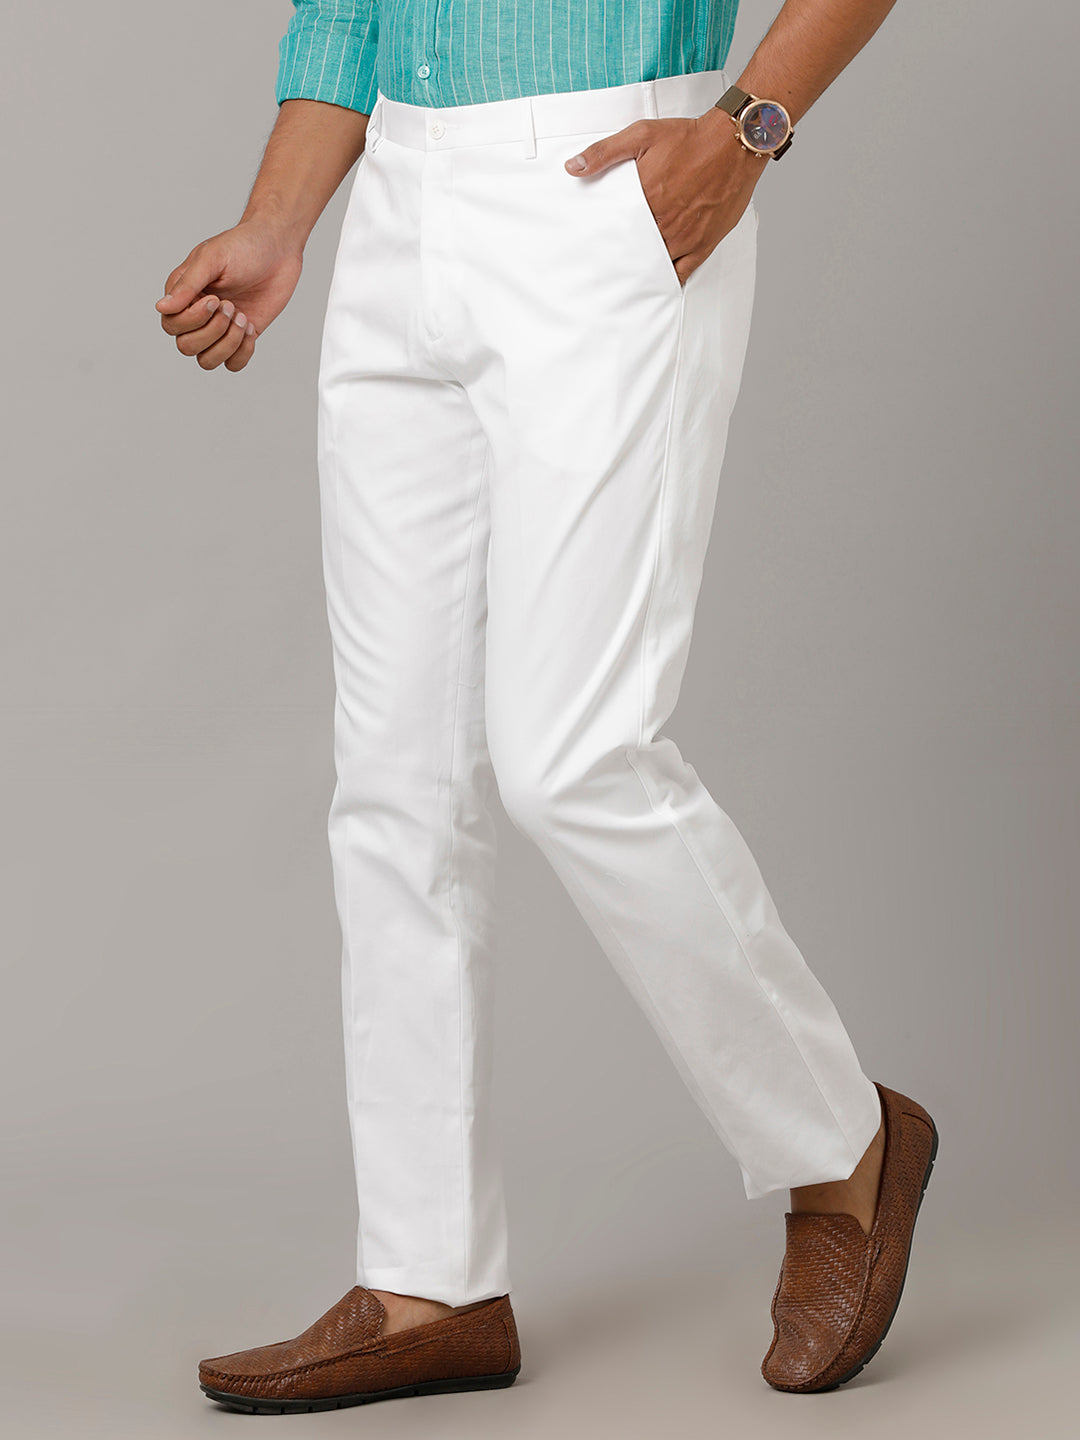 Shop Men's Pants - Classic Fit, Sustainable, and Stylish | Ramraj Cotton